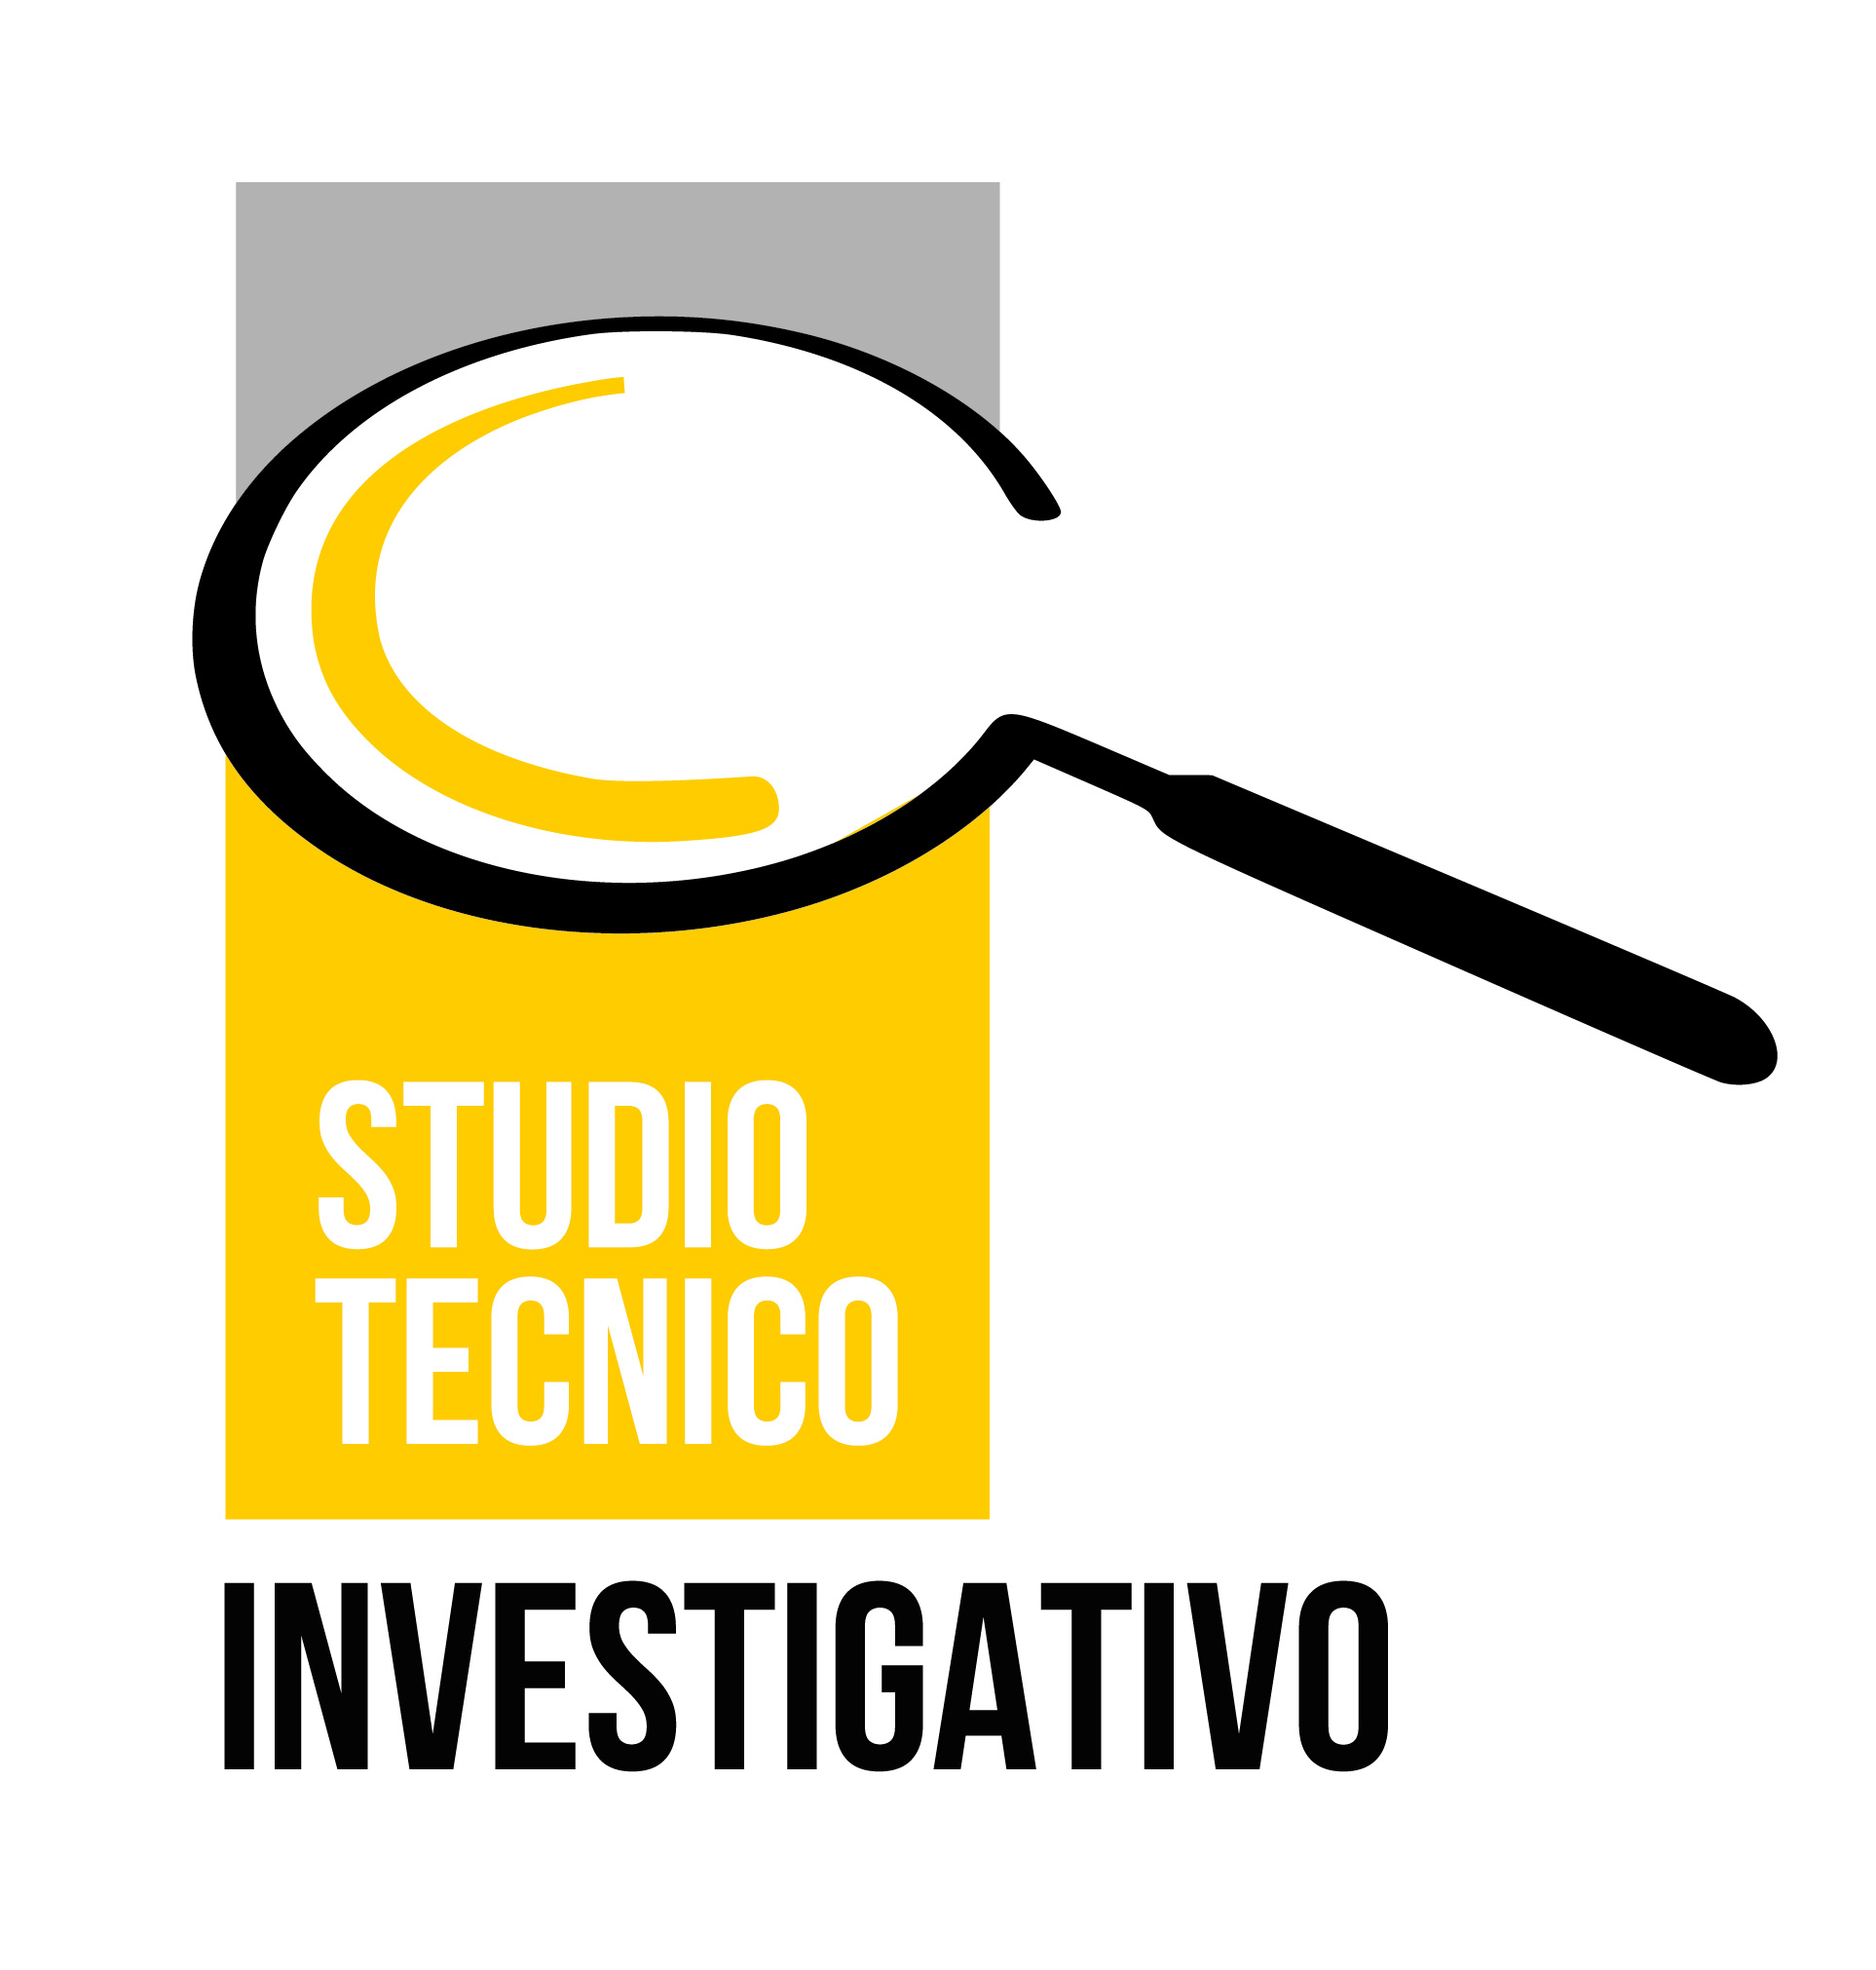 Studio Tecnico Investigativo Srl